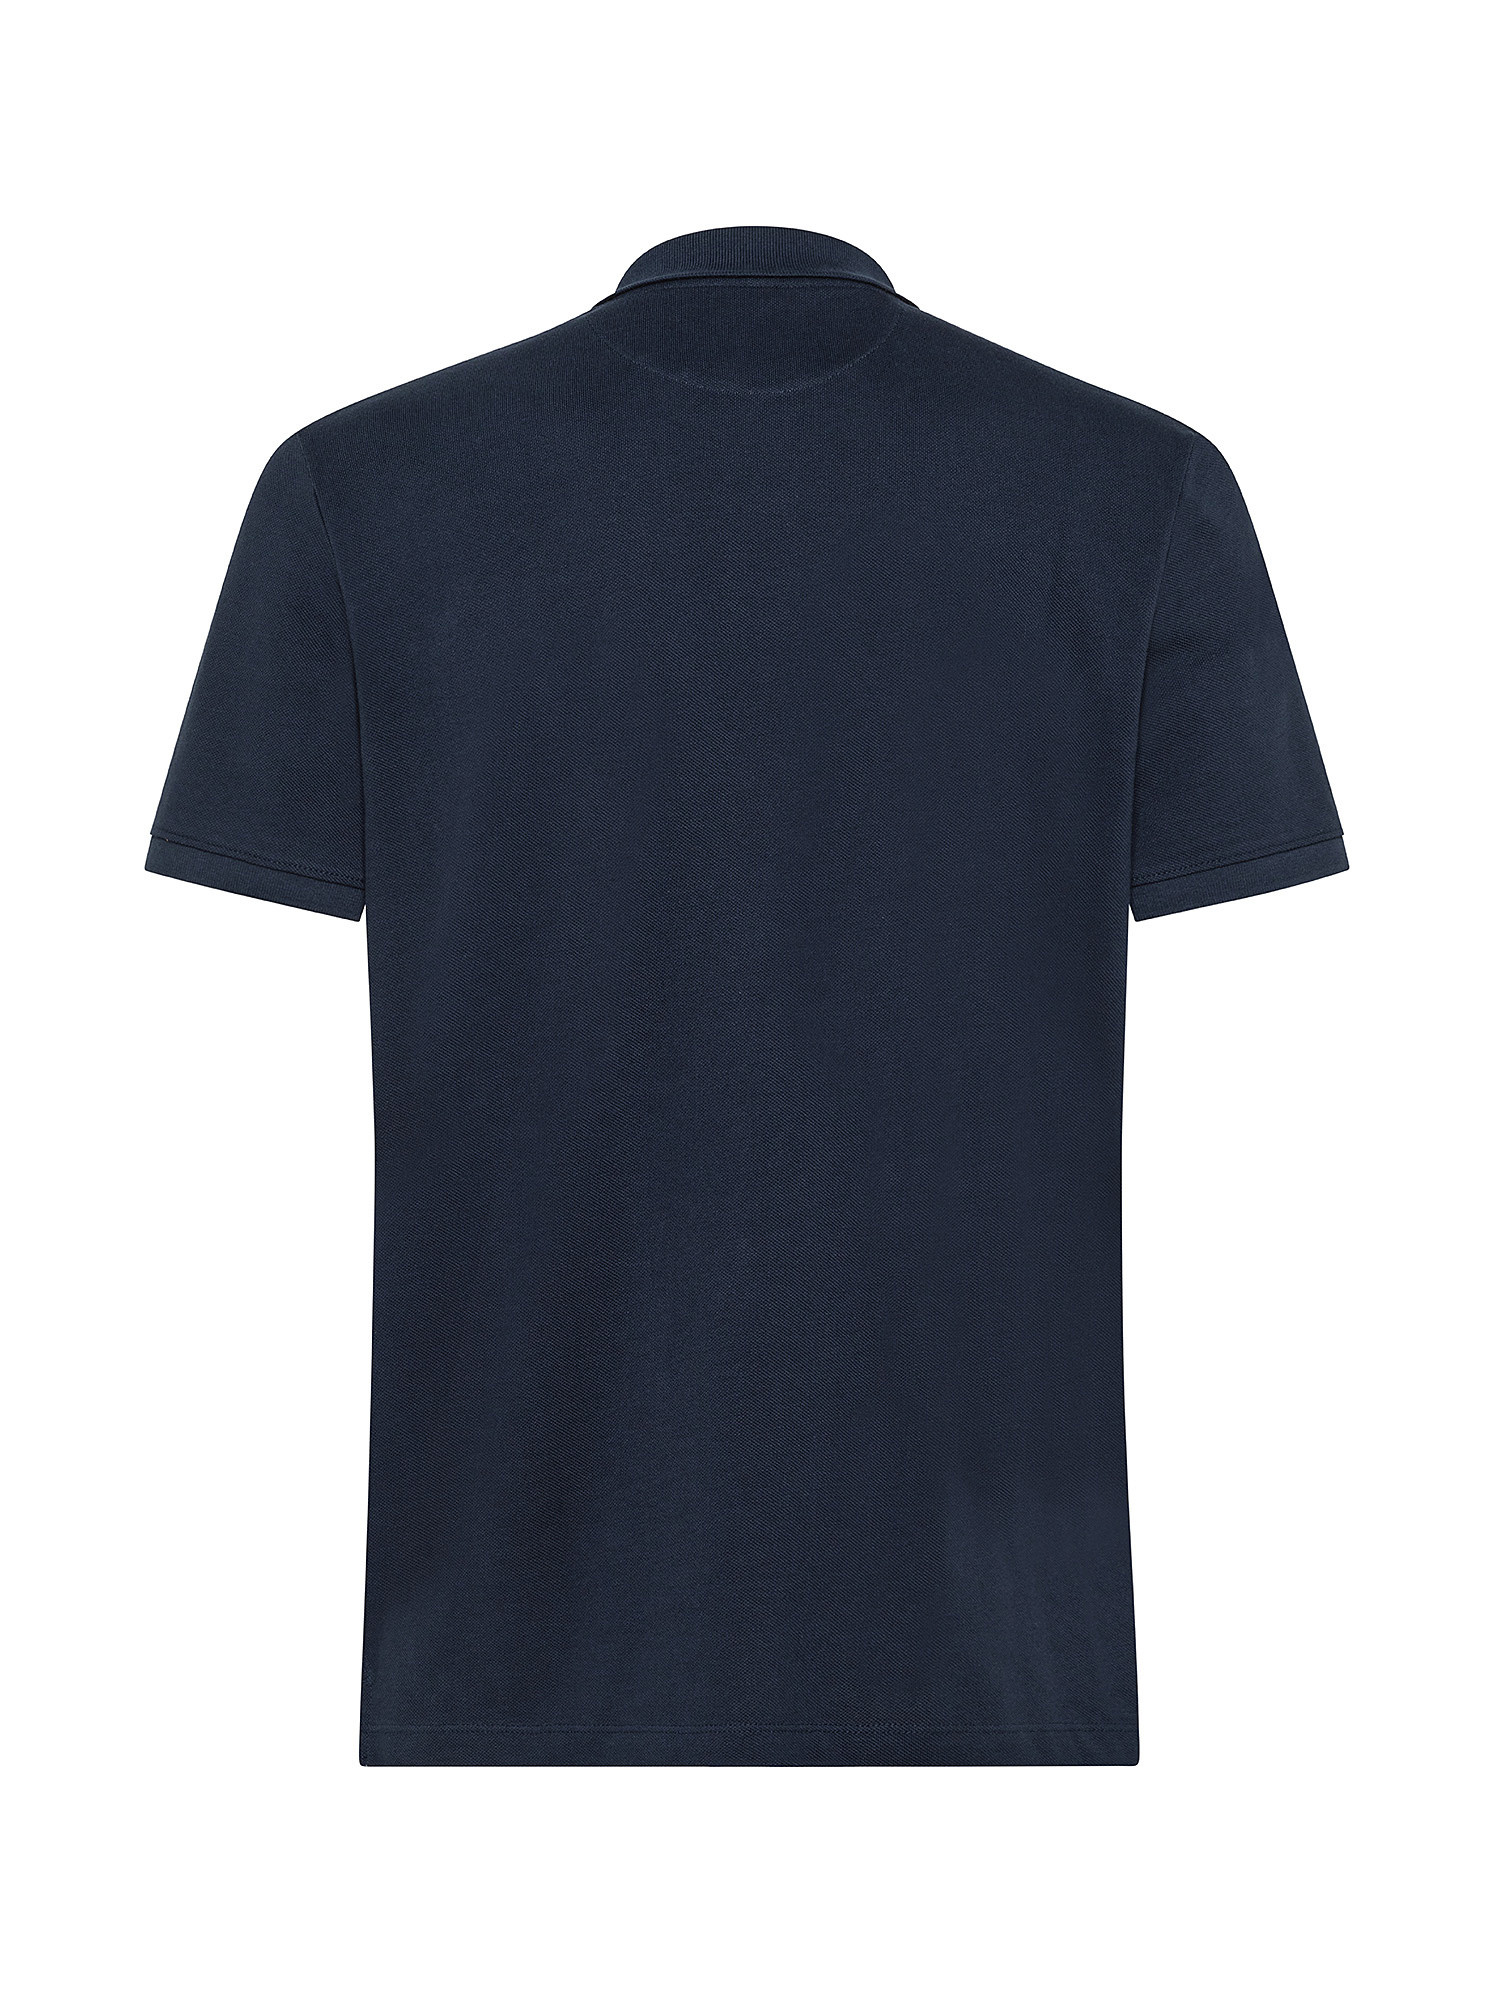 Men's Millers River Piqué Polo Shirt, Blue, large image number 1